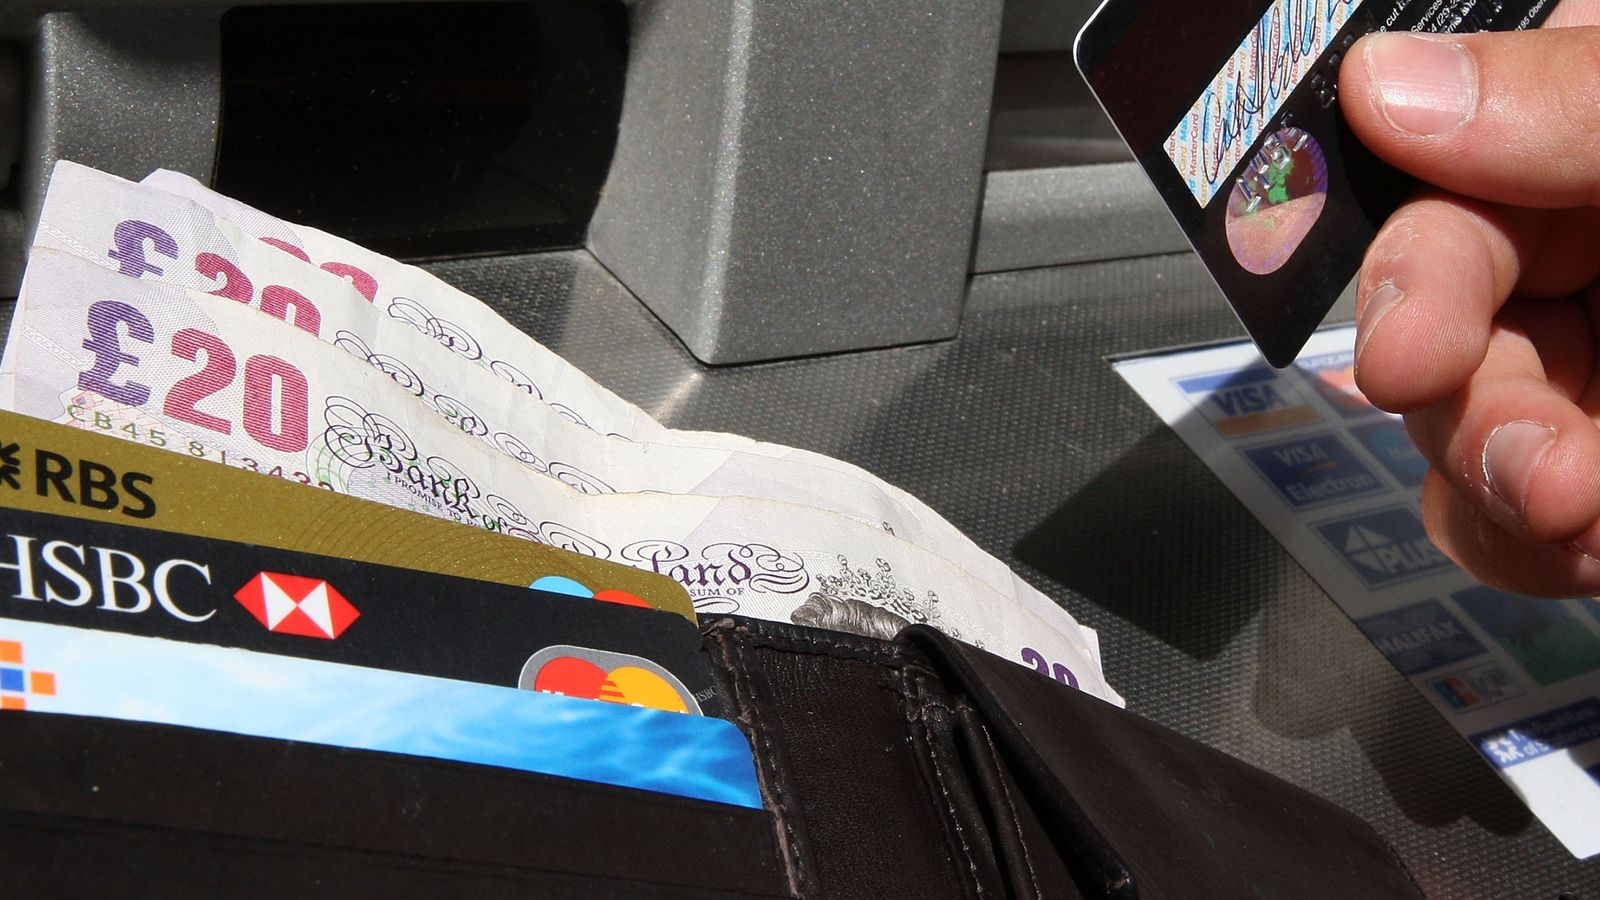 Banks criticised over fraud prevention checks - Sky News